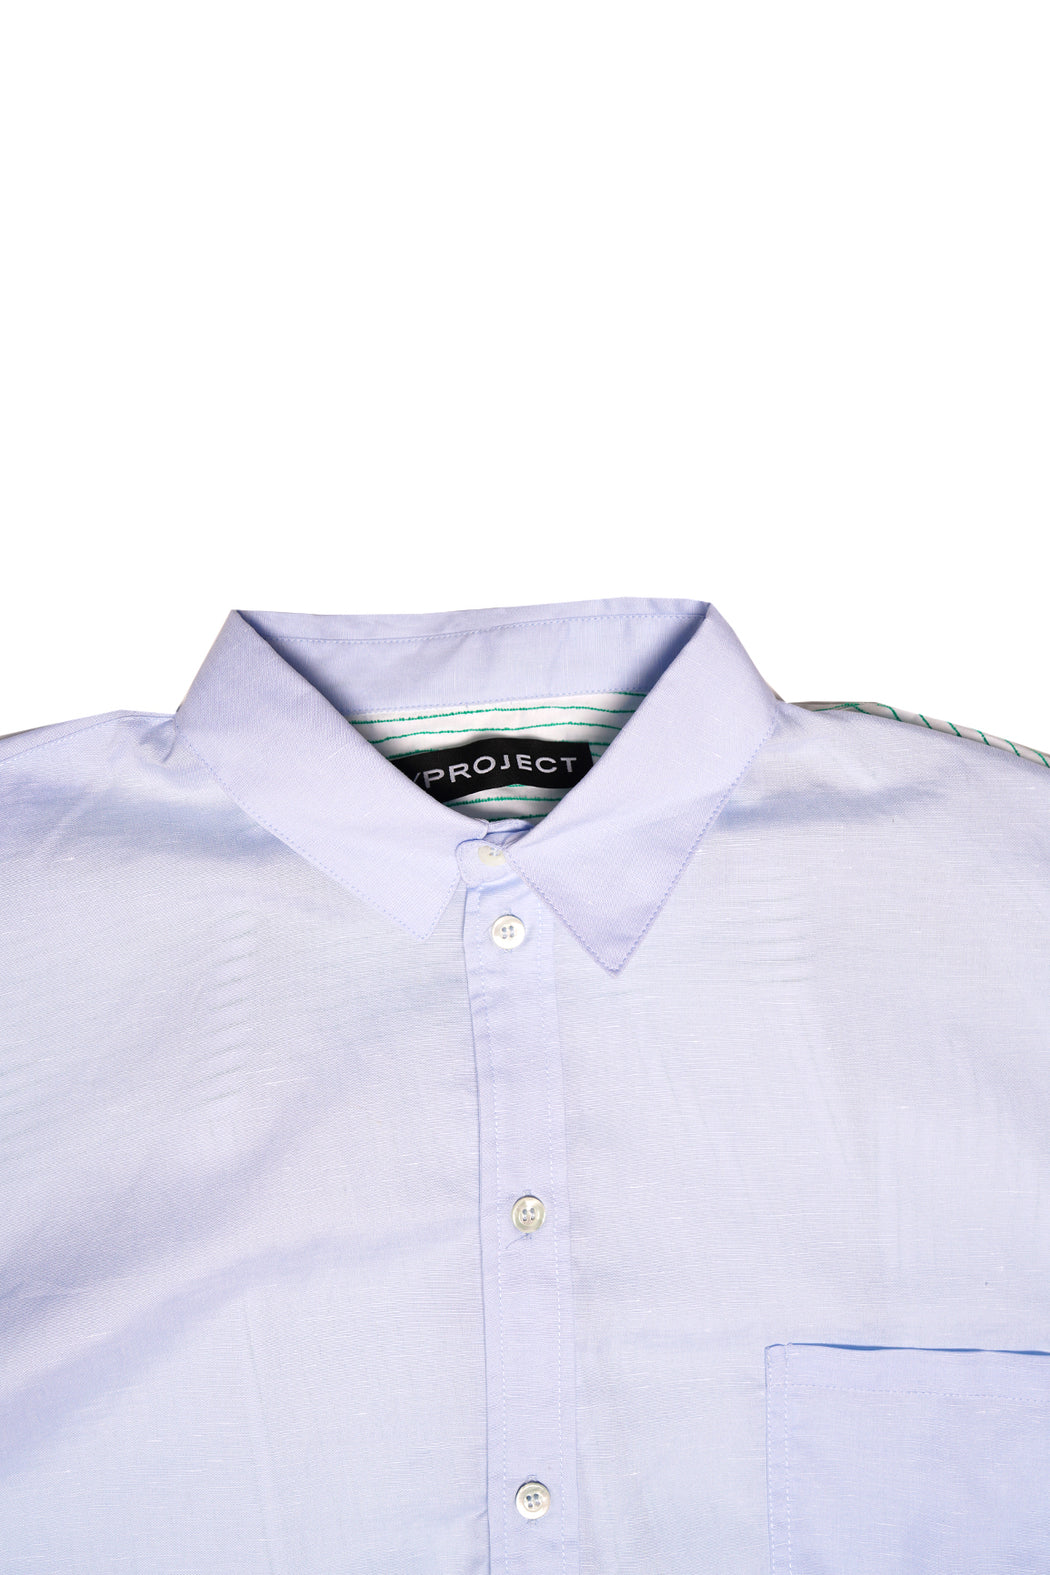 Four Sleeved Short Sleeve Shirt - Blue/Green Stripes